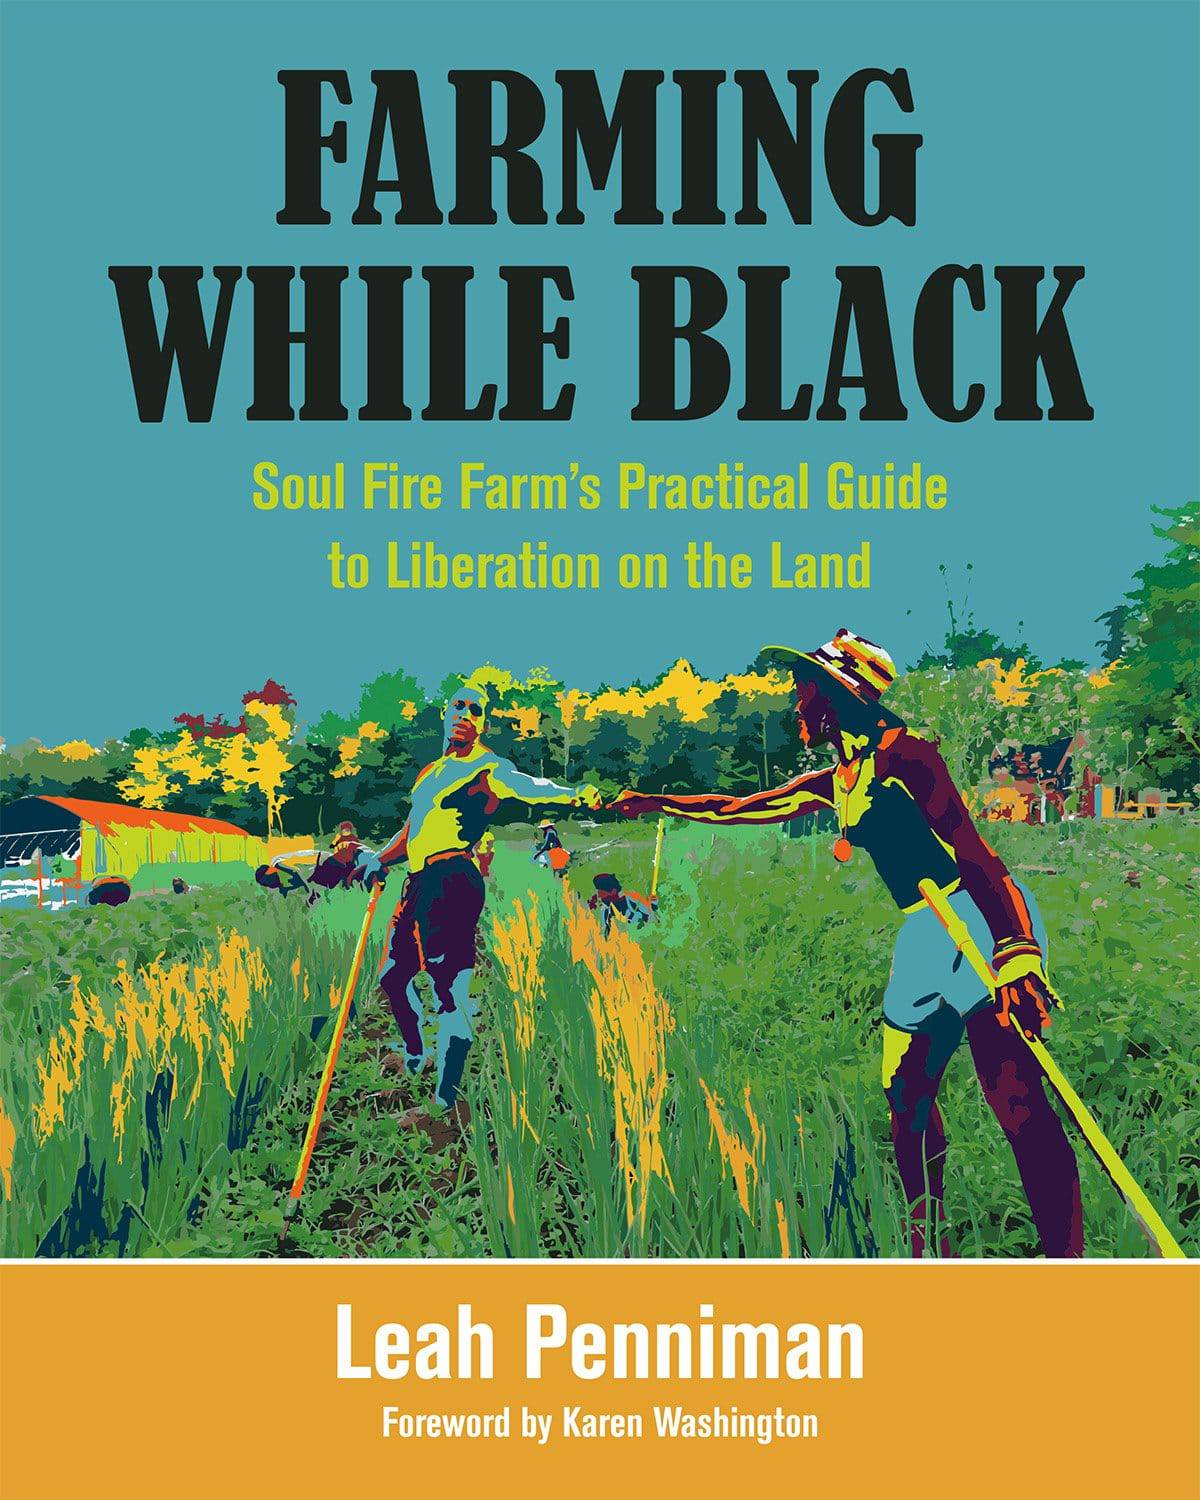 Farming While Black by Leah Penniman - The Josephine Porter Institute